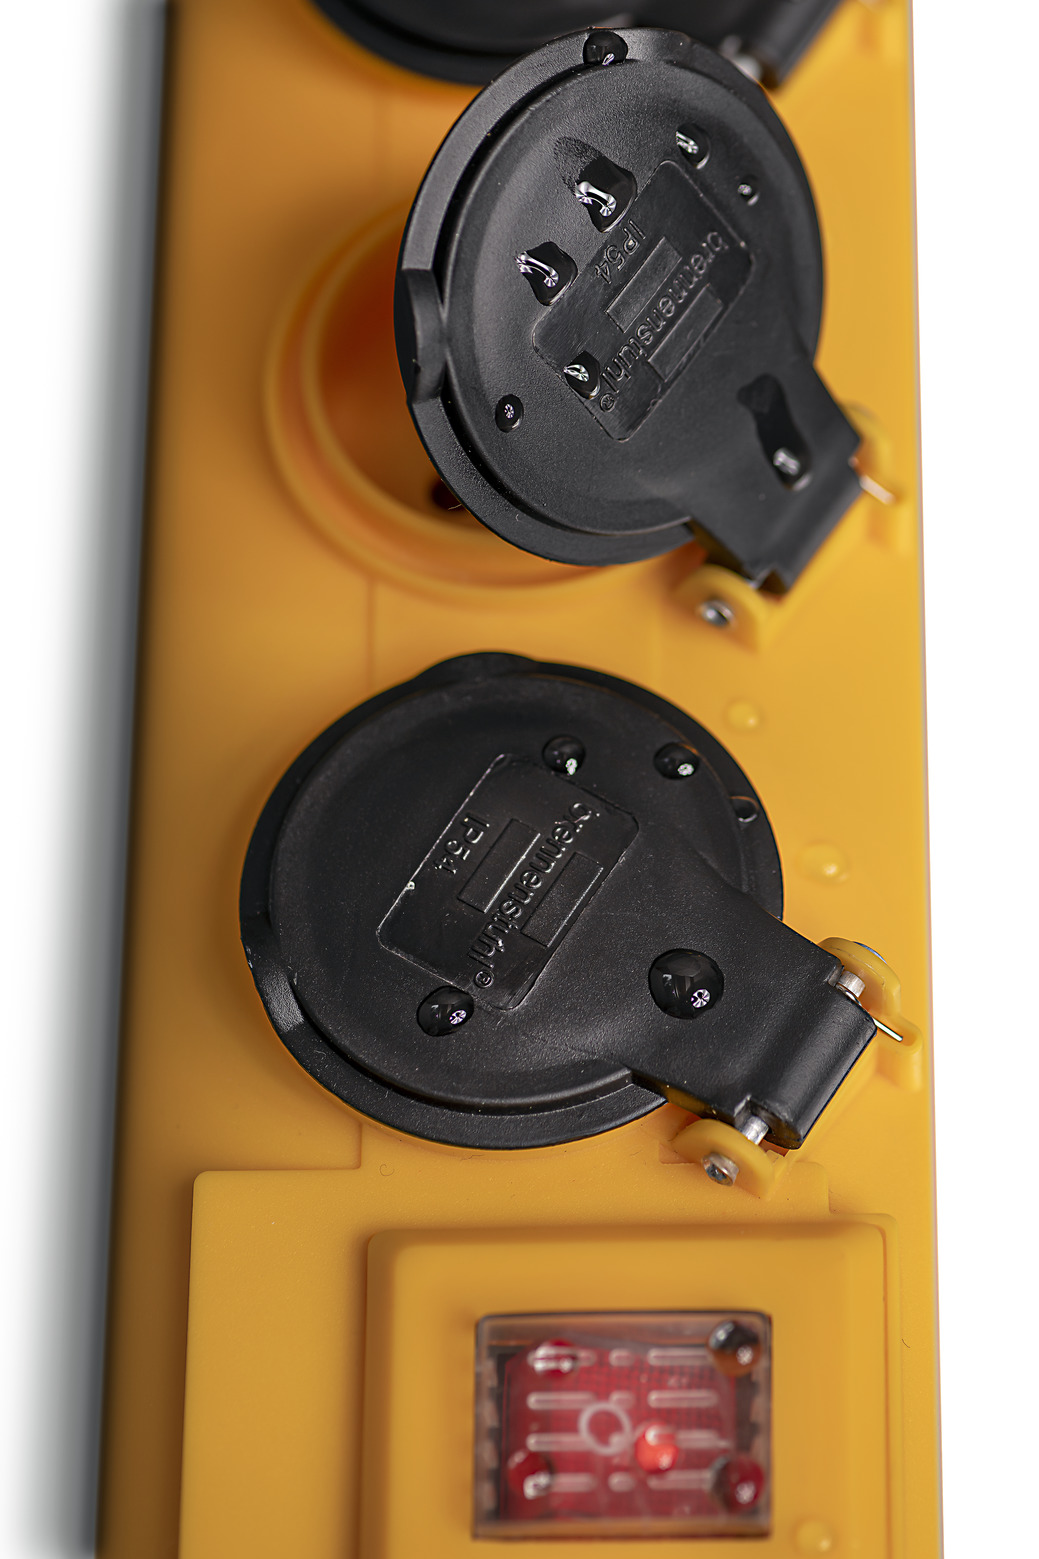 Multiprise Super-Solid SL 554 FR 5 prises avec interrupteur, jaune, 2m  H07RN-F 3G1,5 IP54